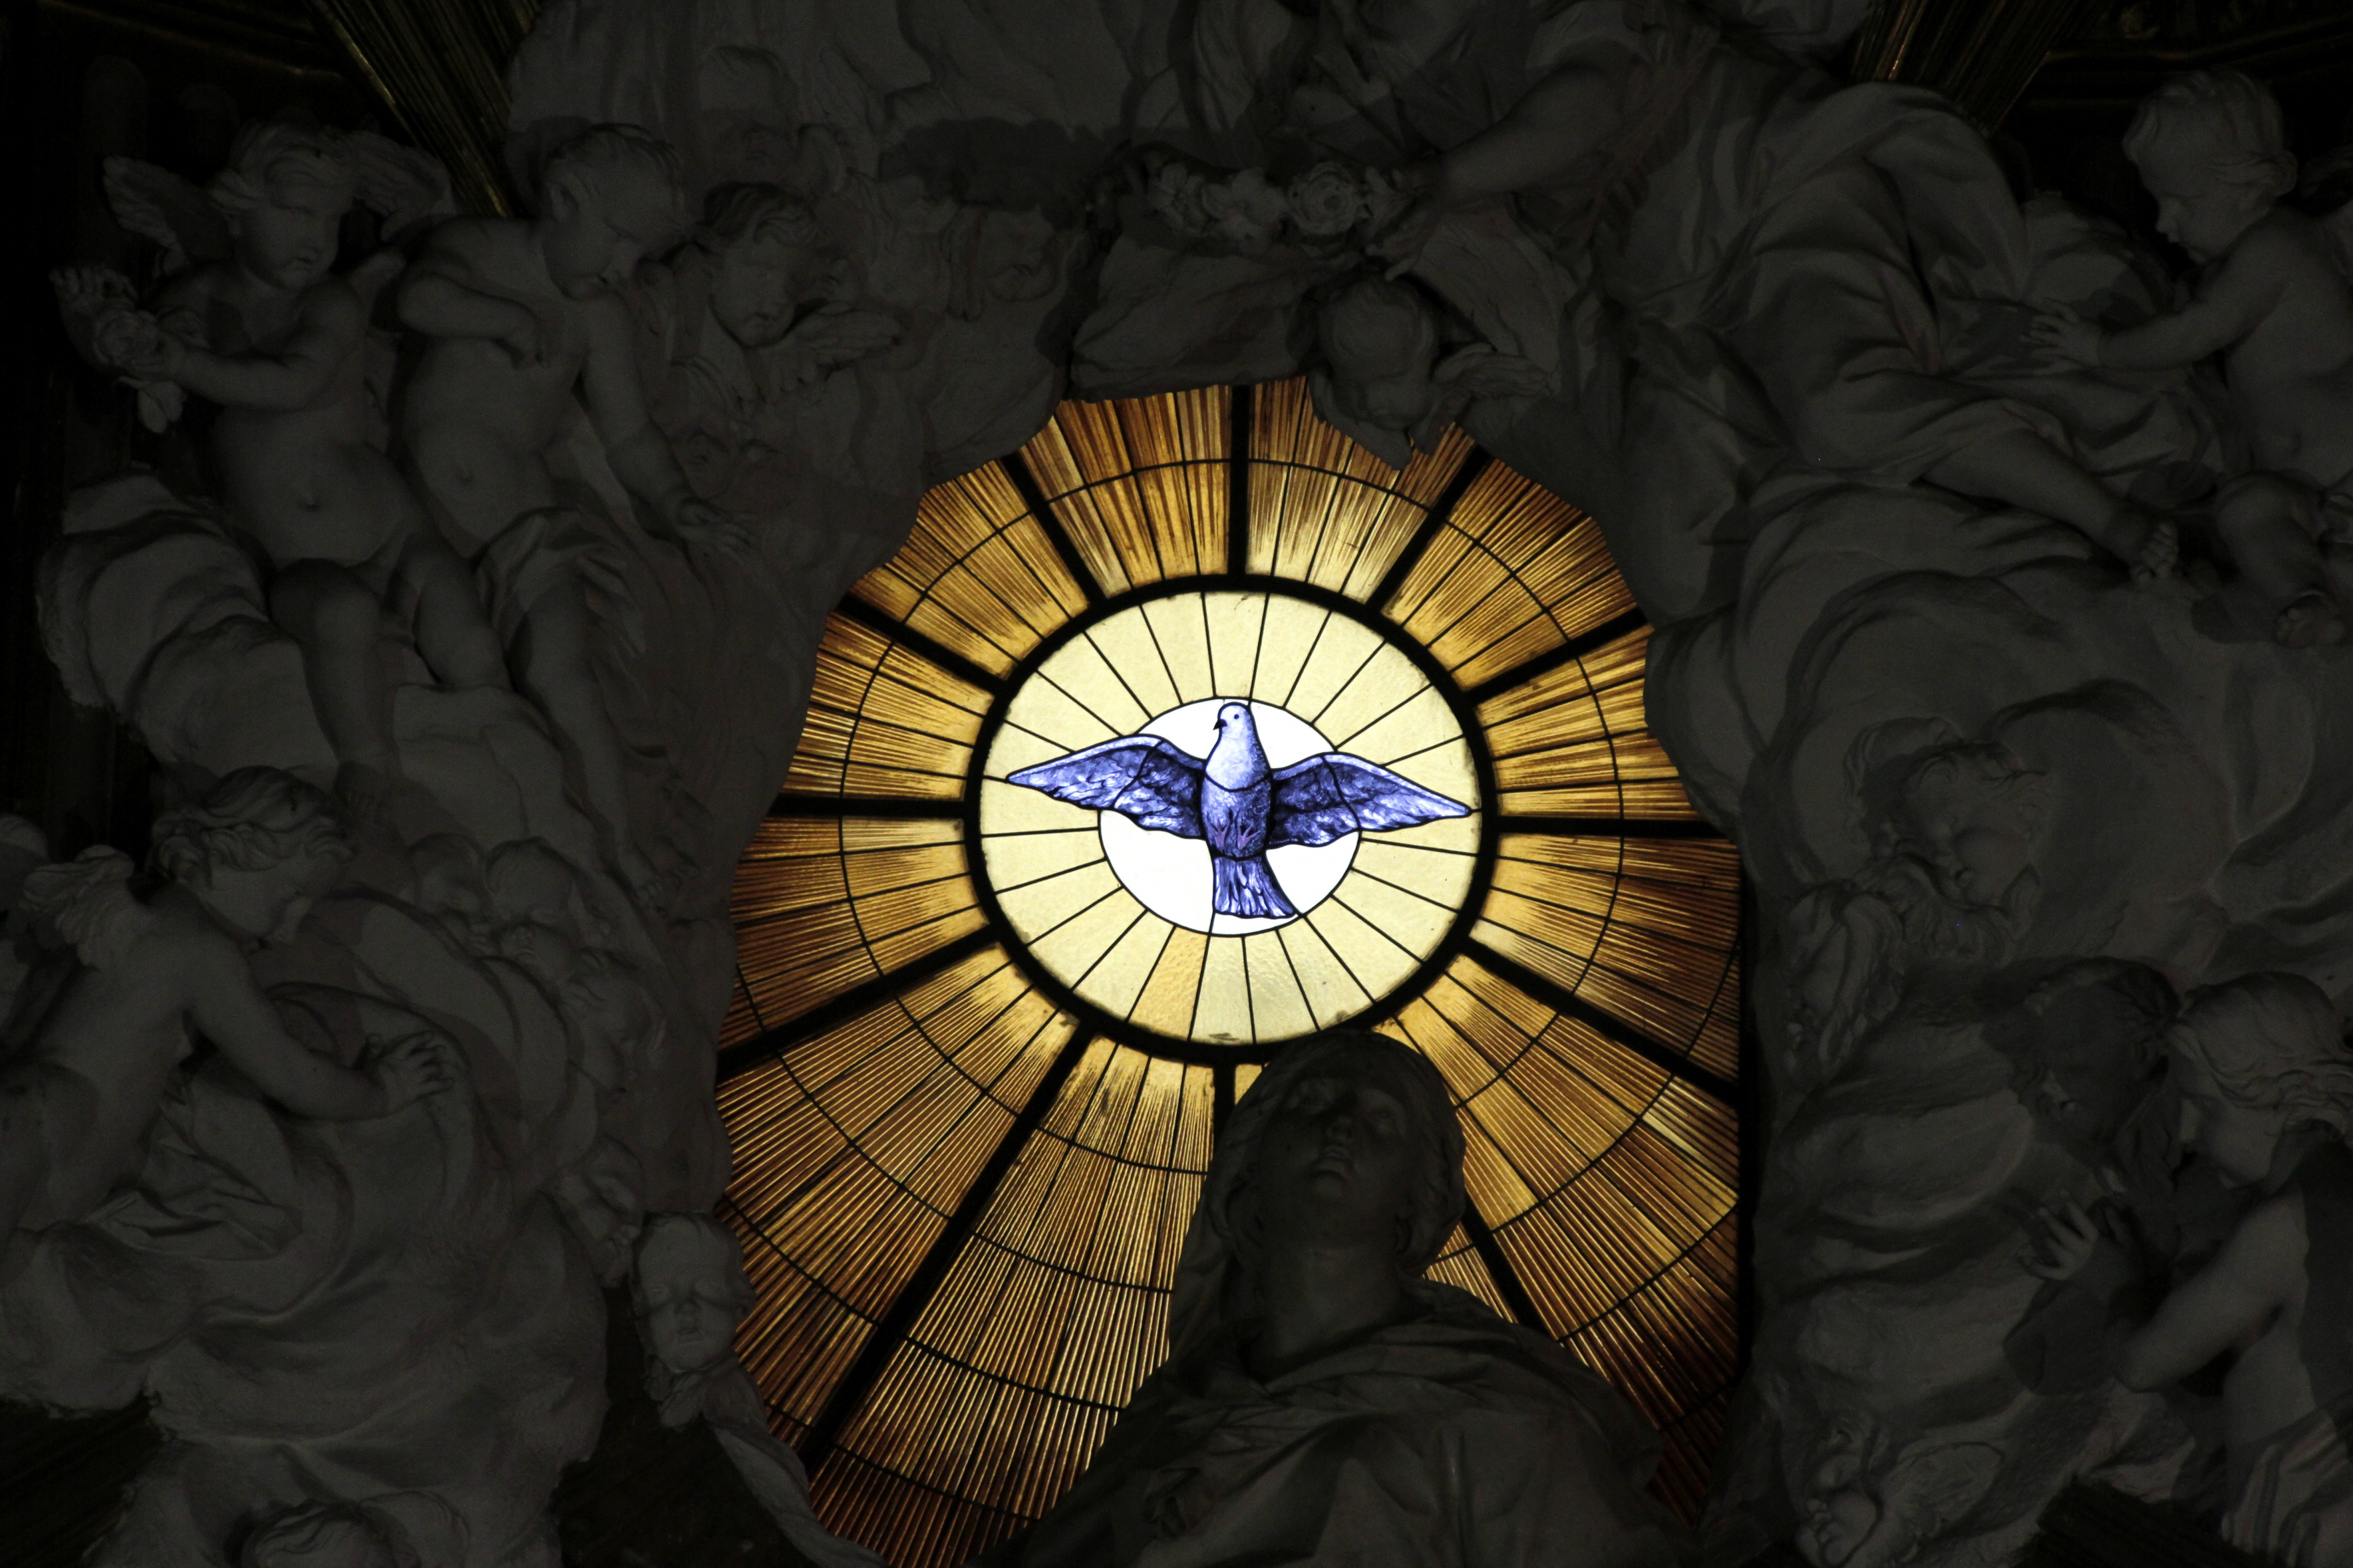 Holy Spirit - Main altar - Duomo - Naples - Italy 2015